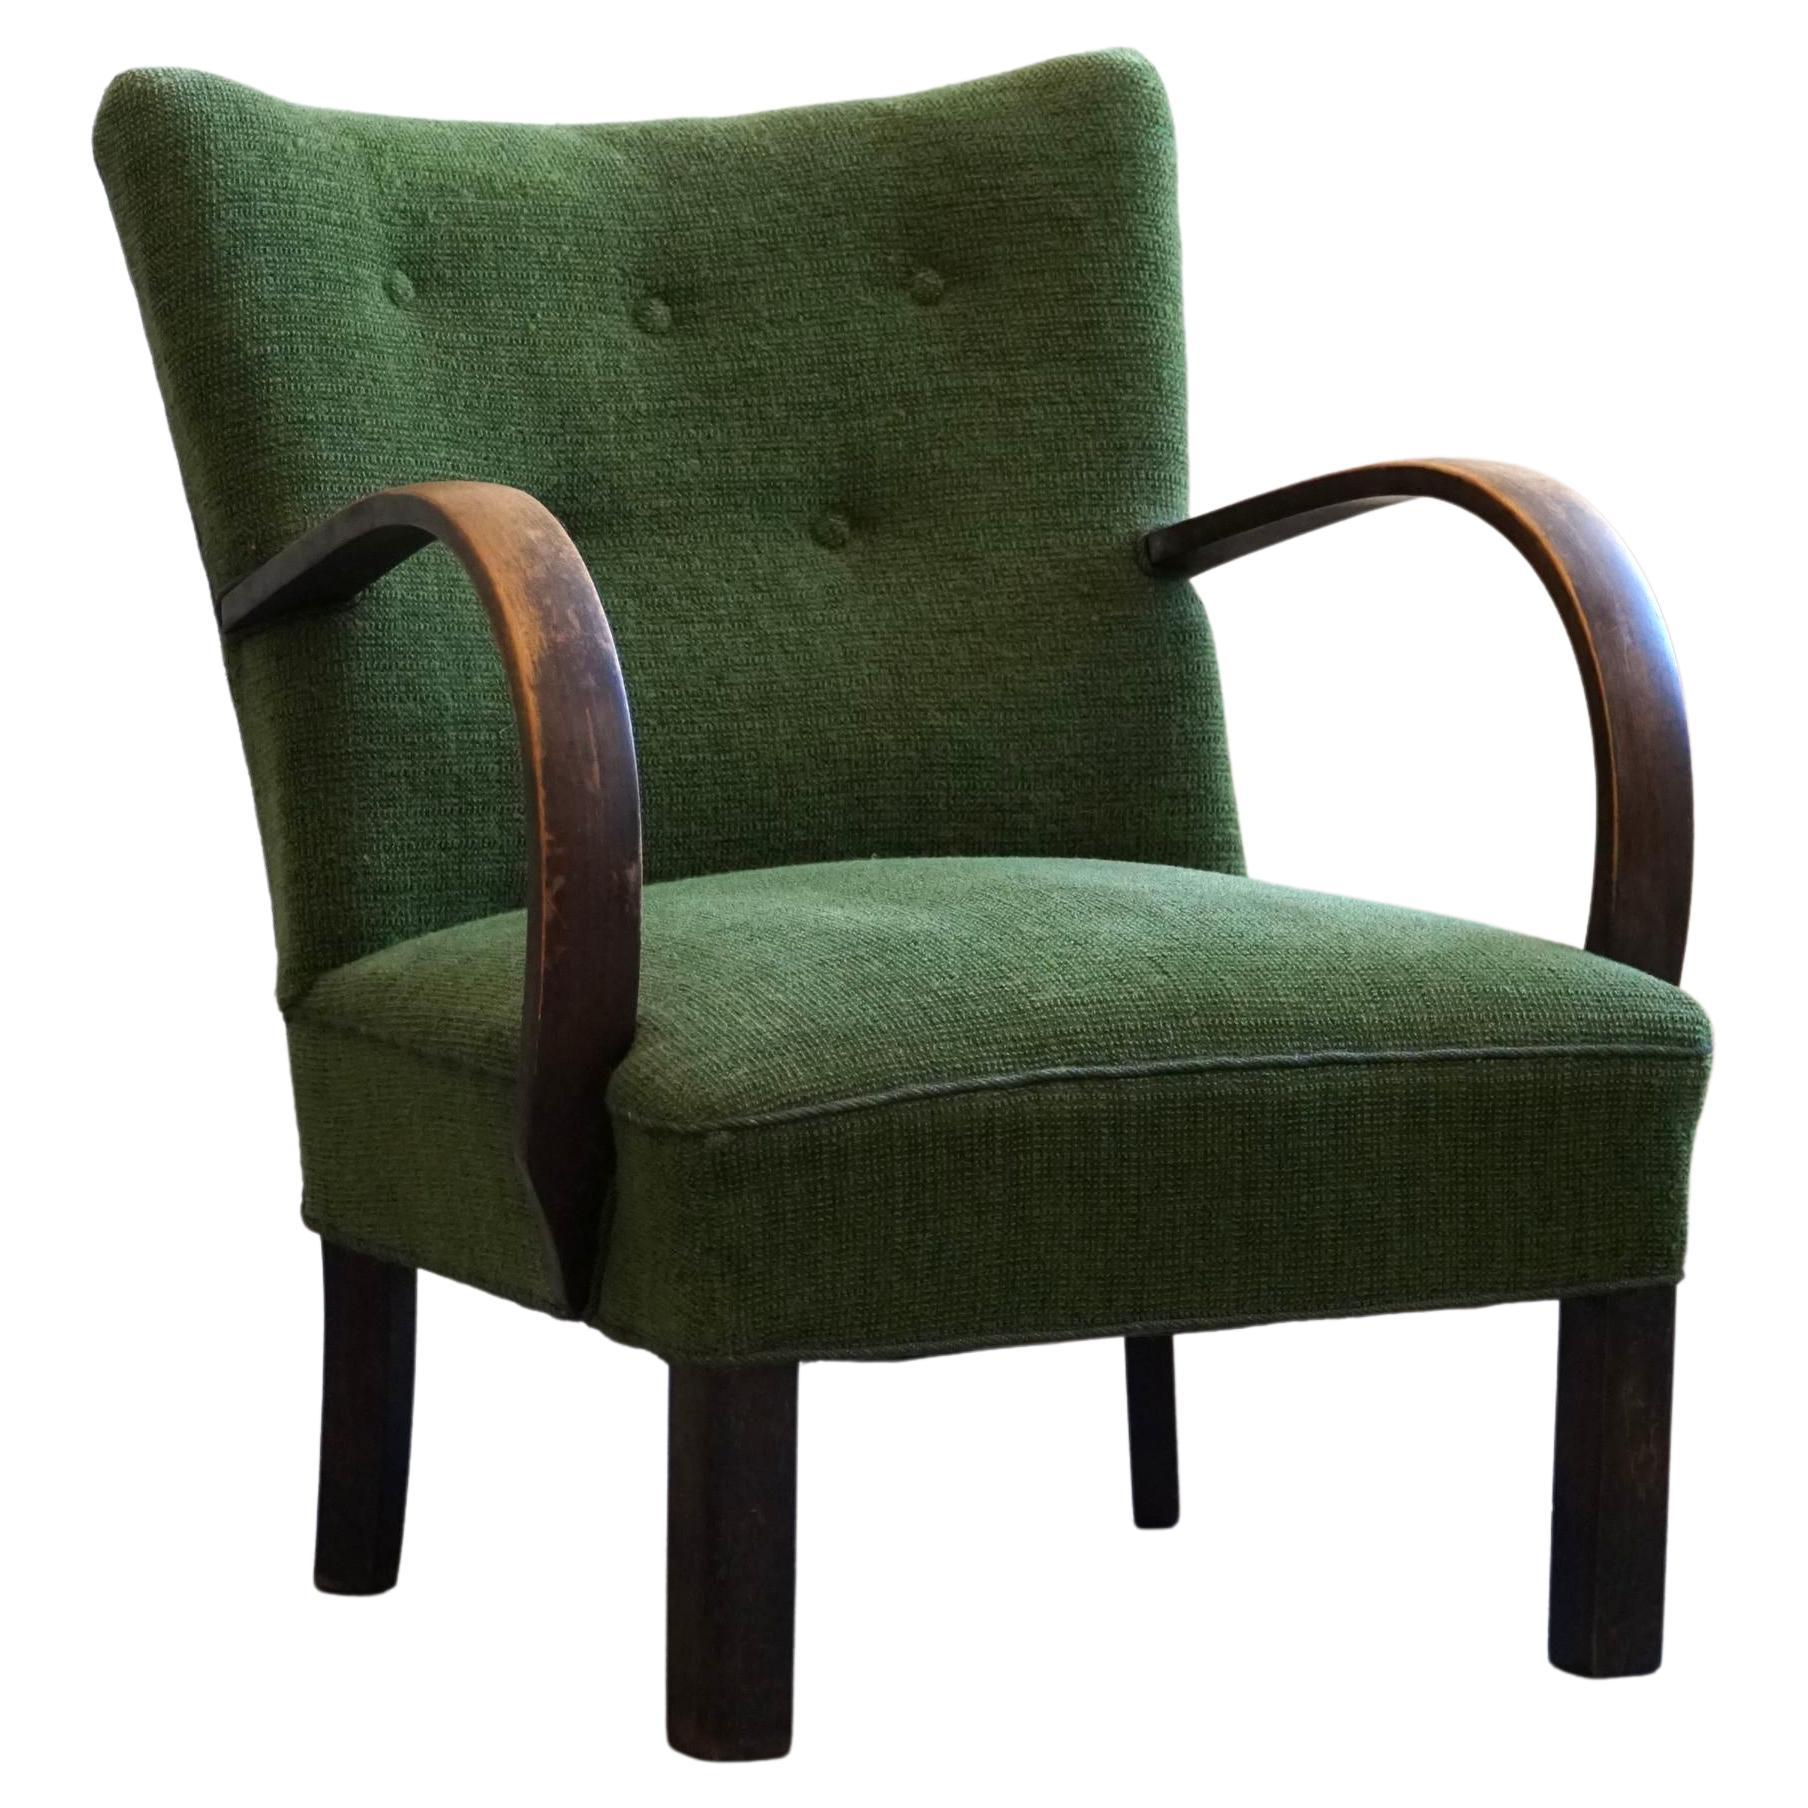 Mid Century Modern Easy Chair in Beech & Green Fabric, Danish Cabinetmaker, 1940